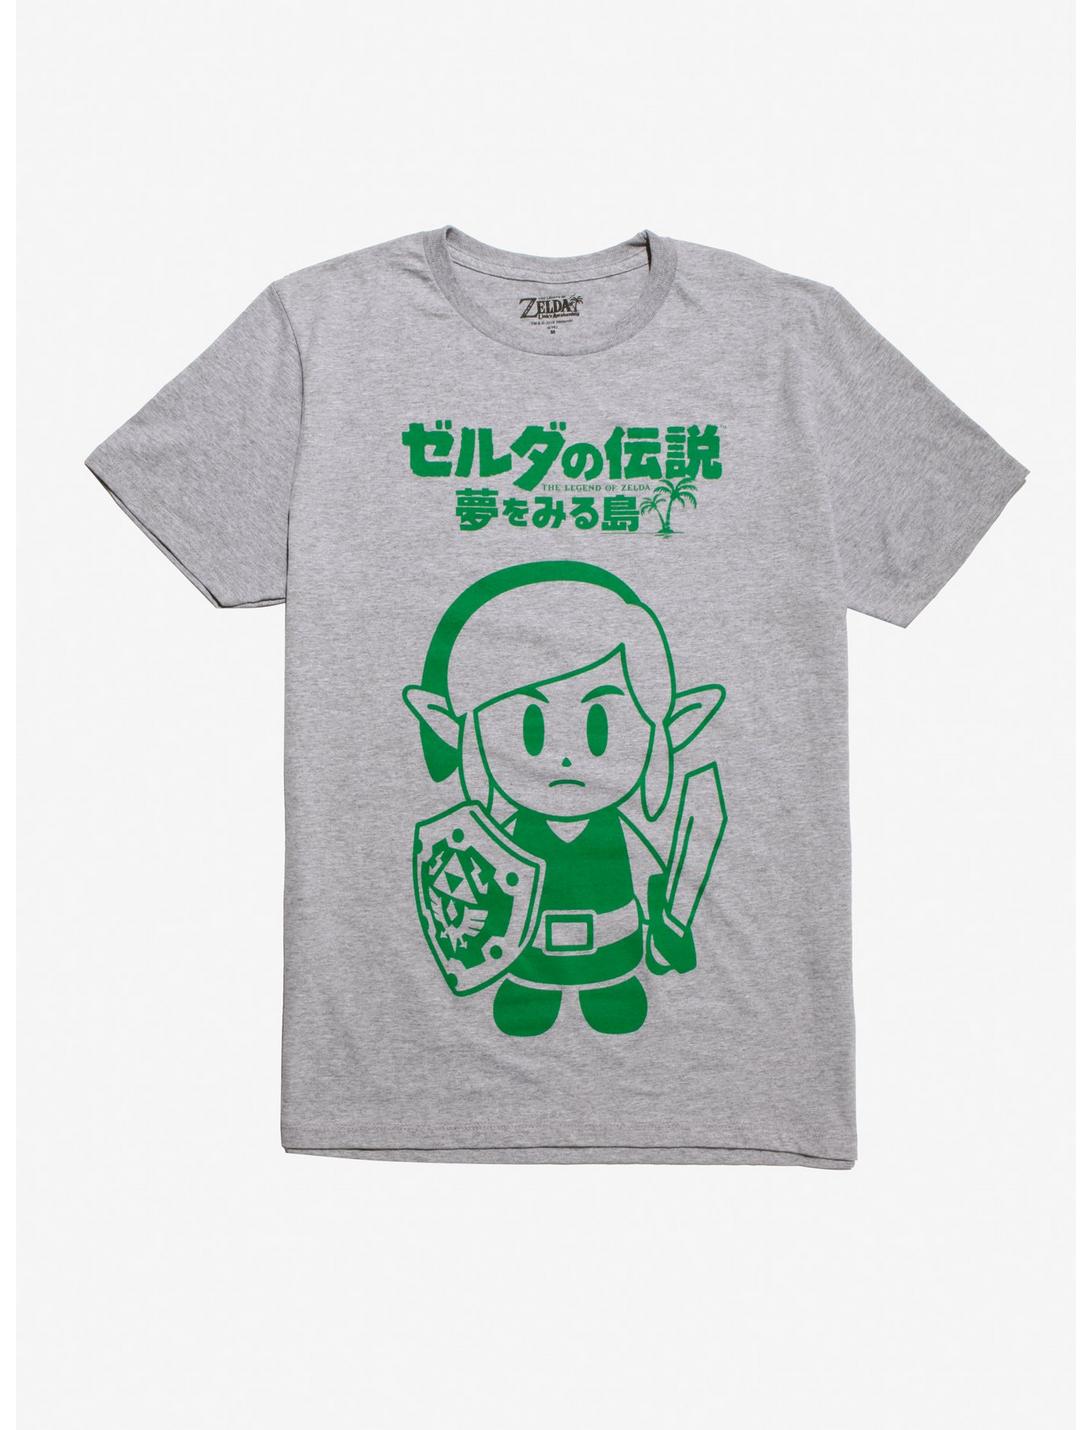 The Legend Of Zelda: Link's Awakening Chibi Link T-Shirt, GREEN, hi-res